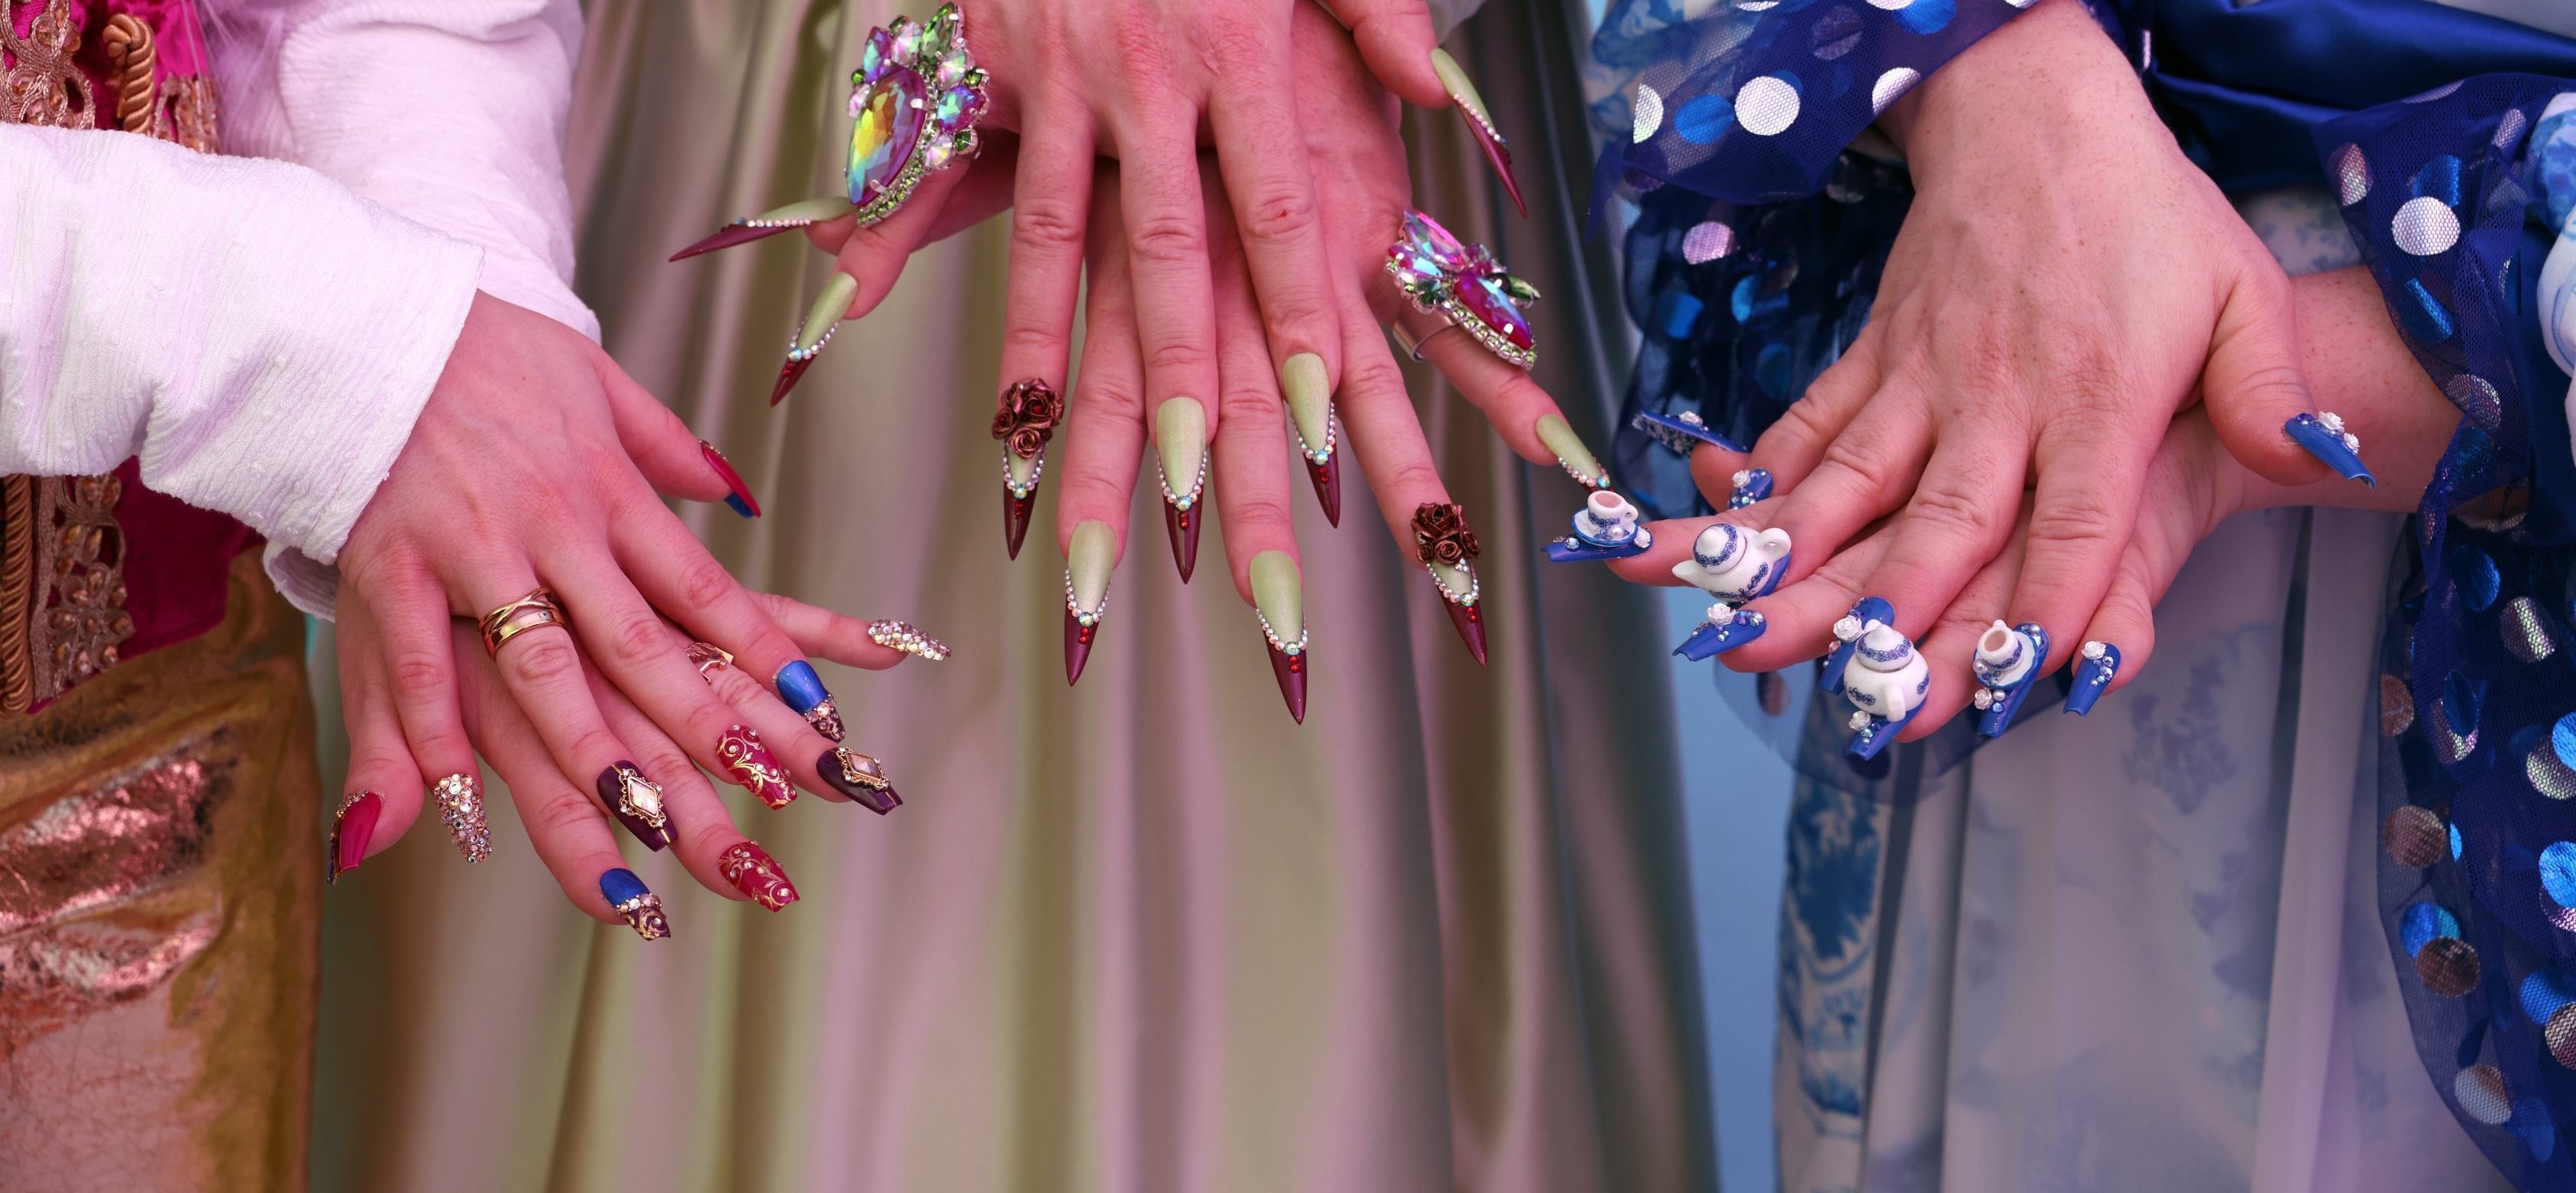 Dare de LaFemme, Rowena Whey and Tyffanie Morgan showcase their nails done by Funeral Face Nails (@funeralfacenails). Photo: Bernard Clark